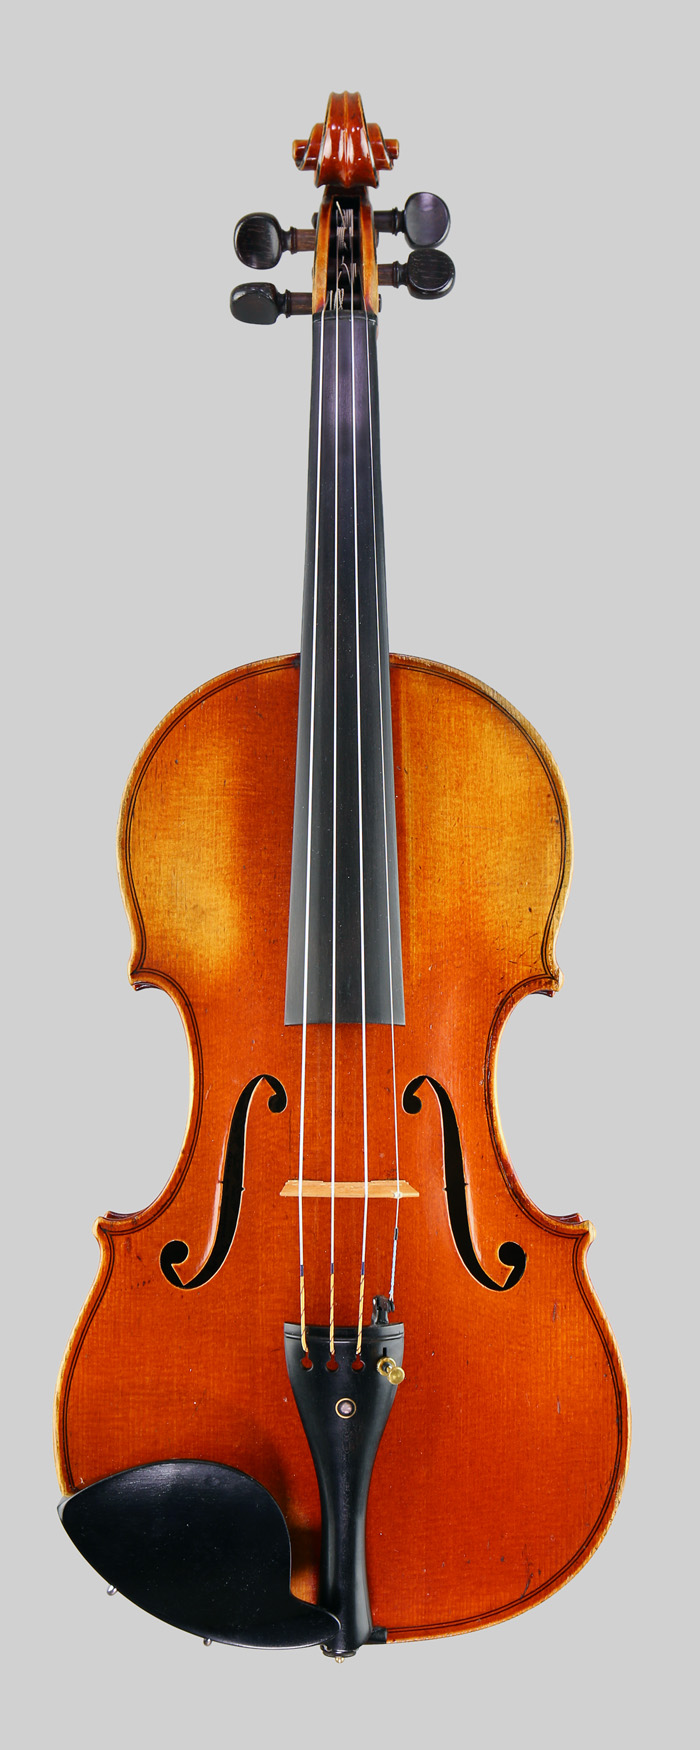 Violin front